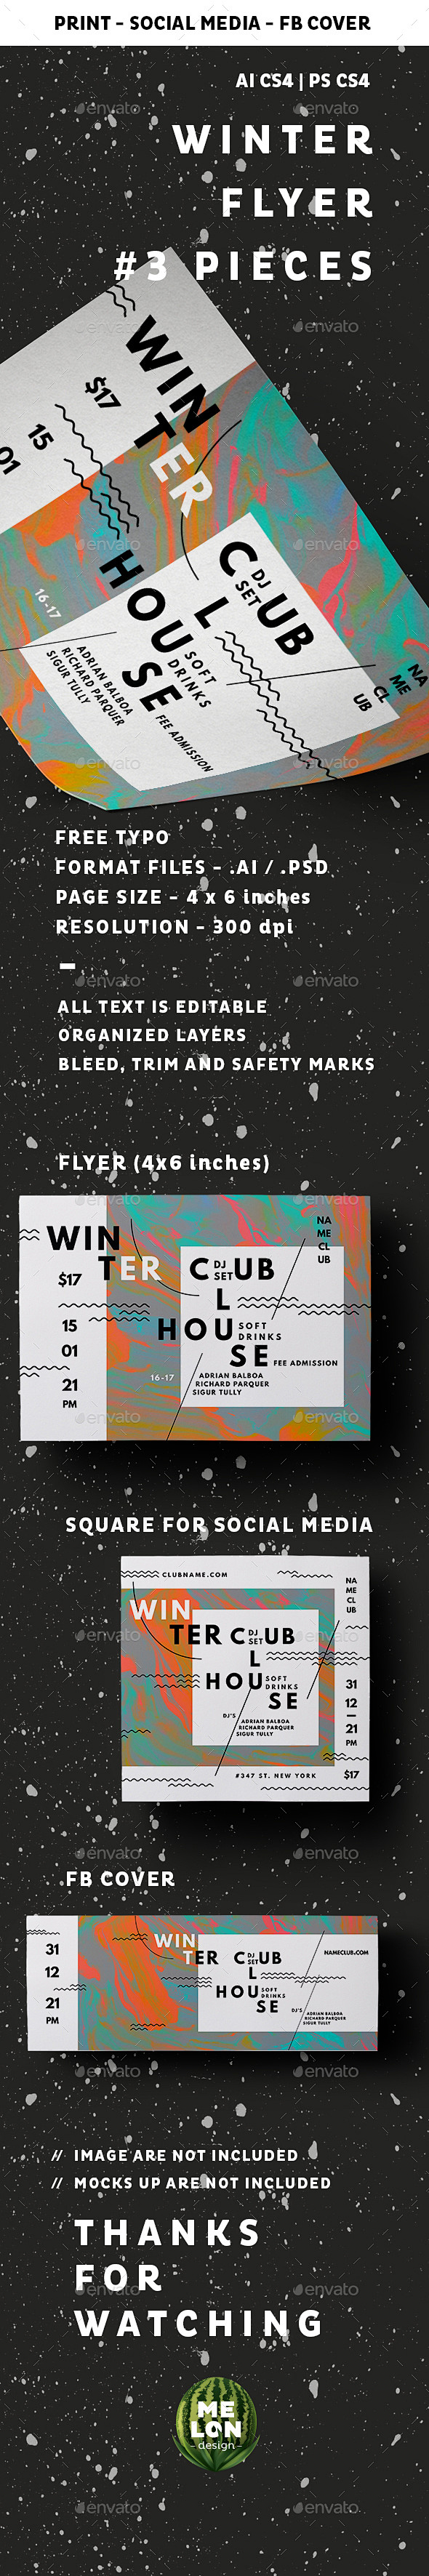 Winter Club House - ...